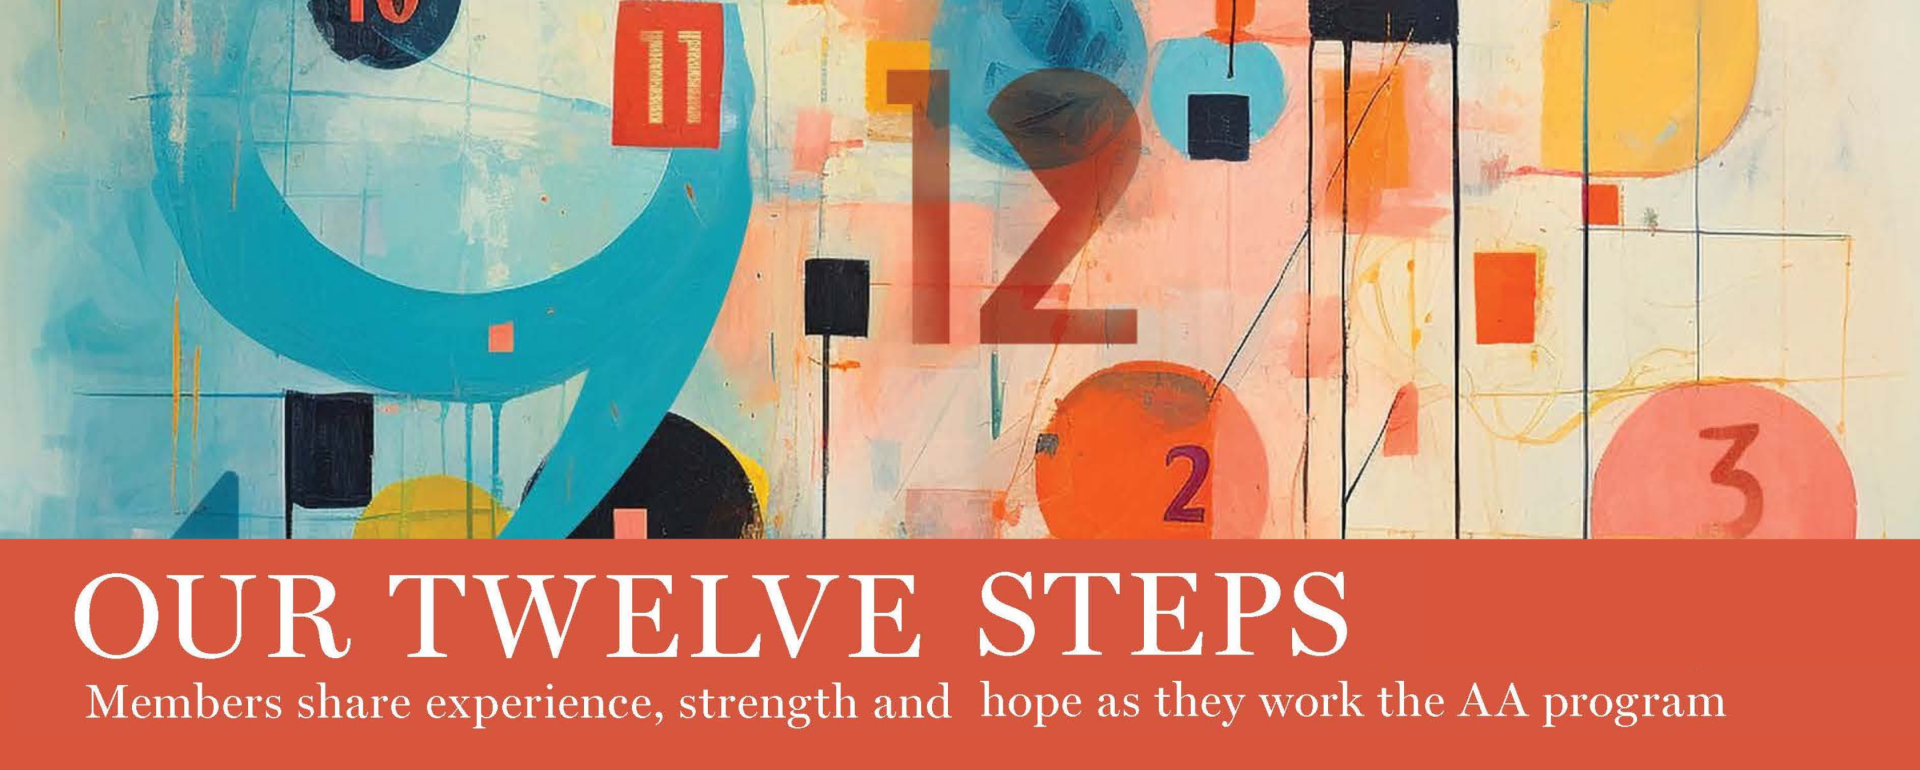 Our Twelve Steps